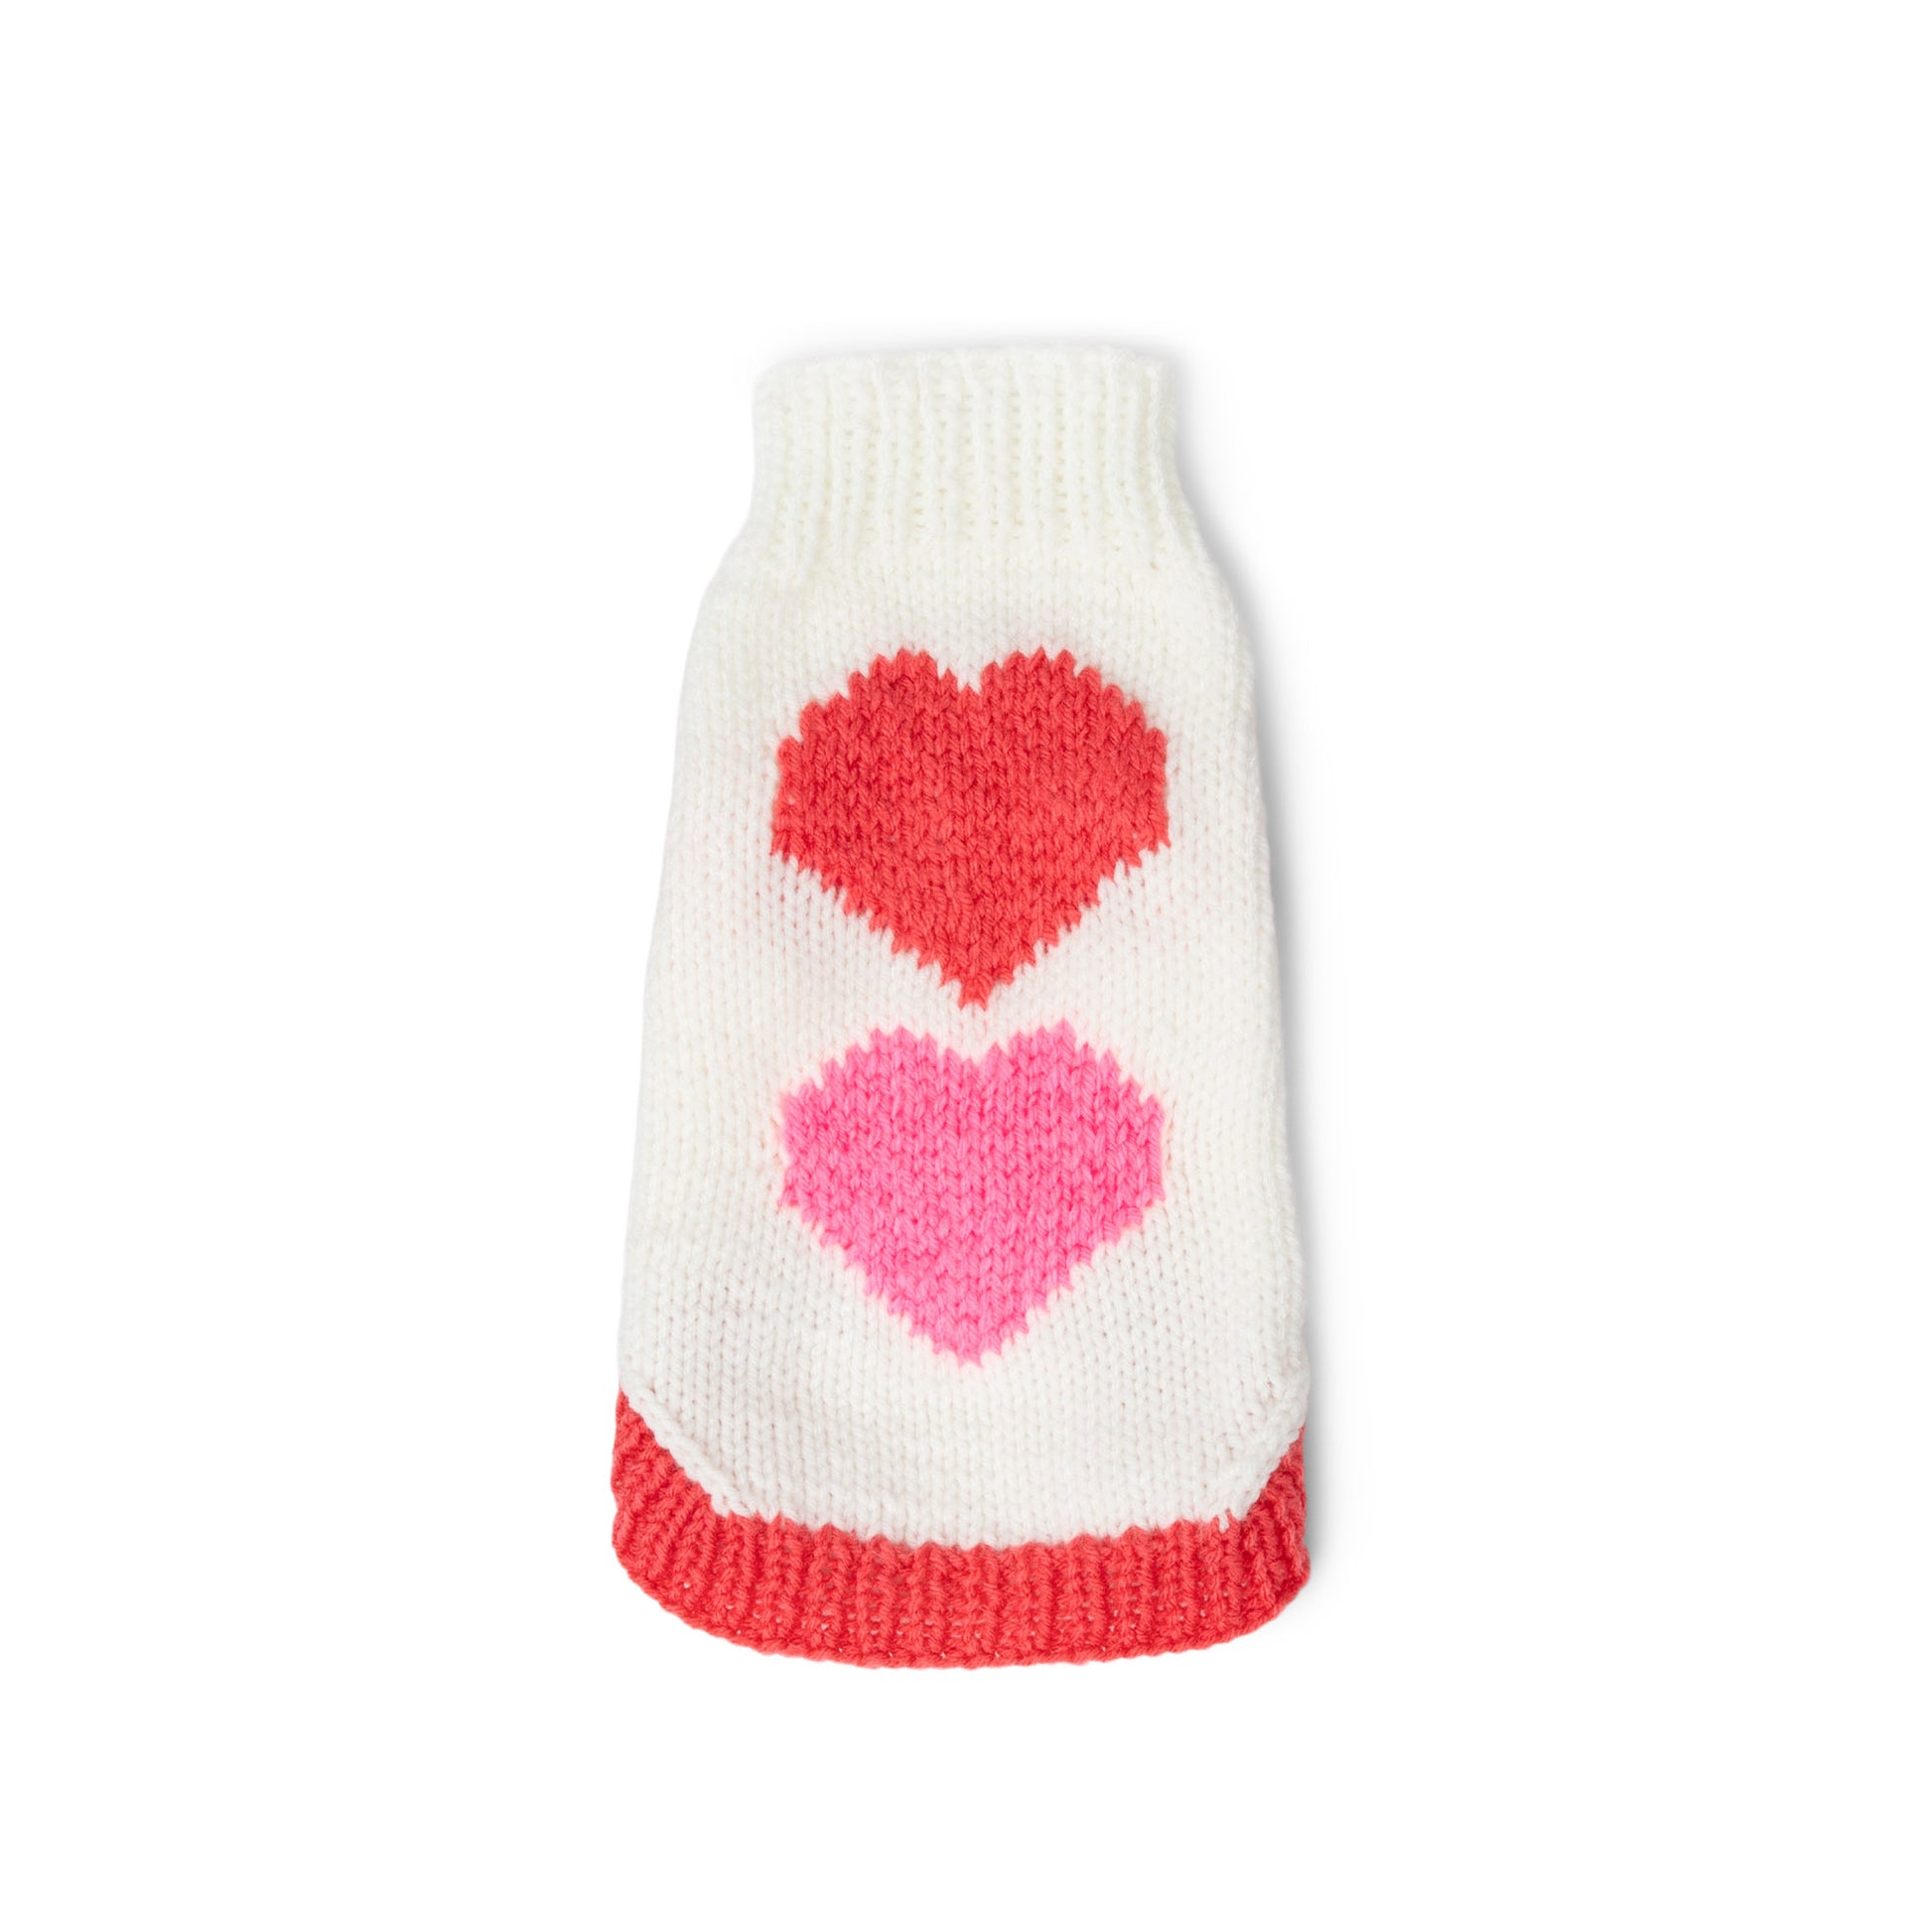 Free Red Heart Puppy Love Knit Sweater Pattern